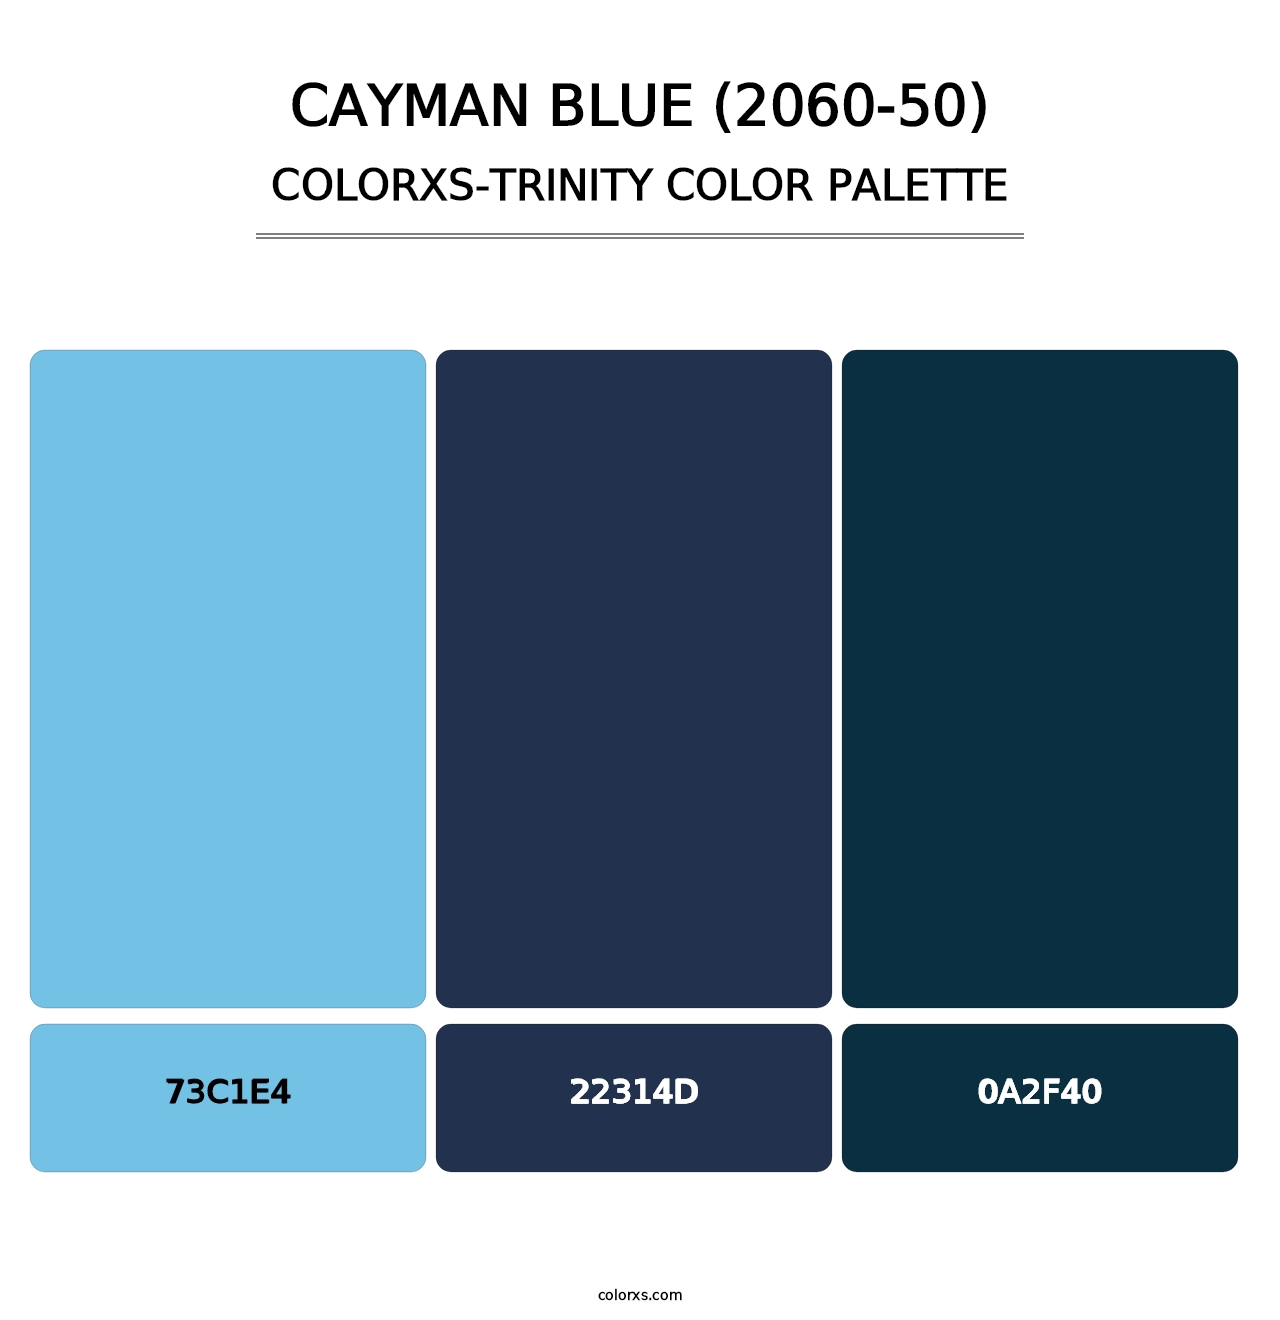 Cayman Blue (2060-50) - Colorxs Trinity Palette